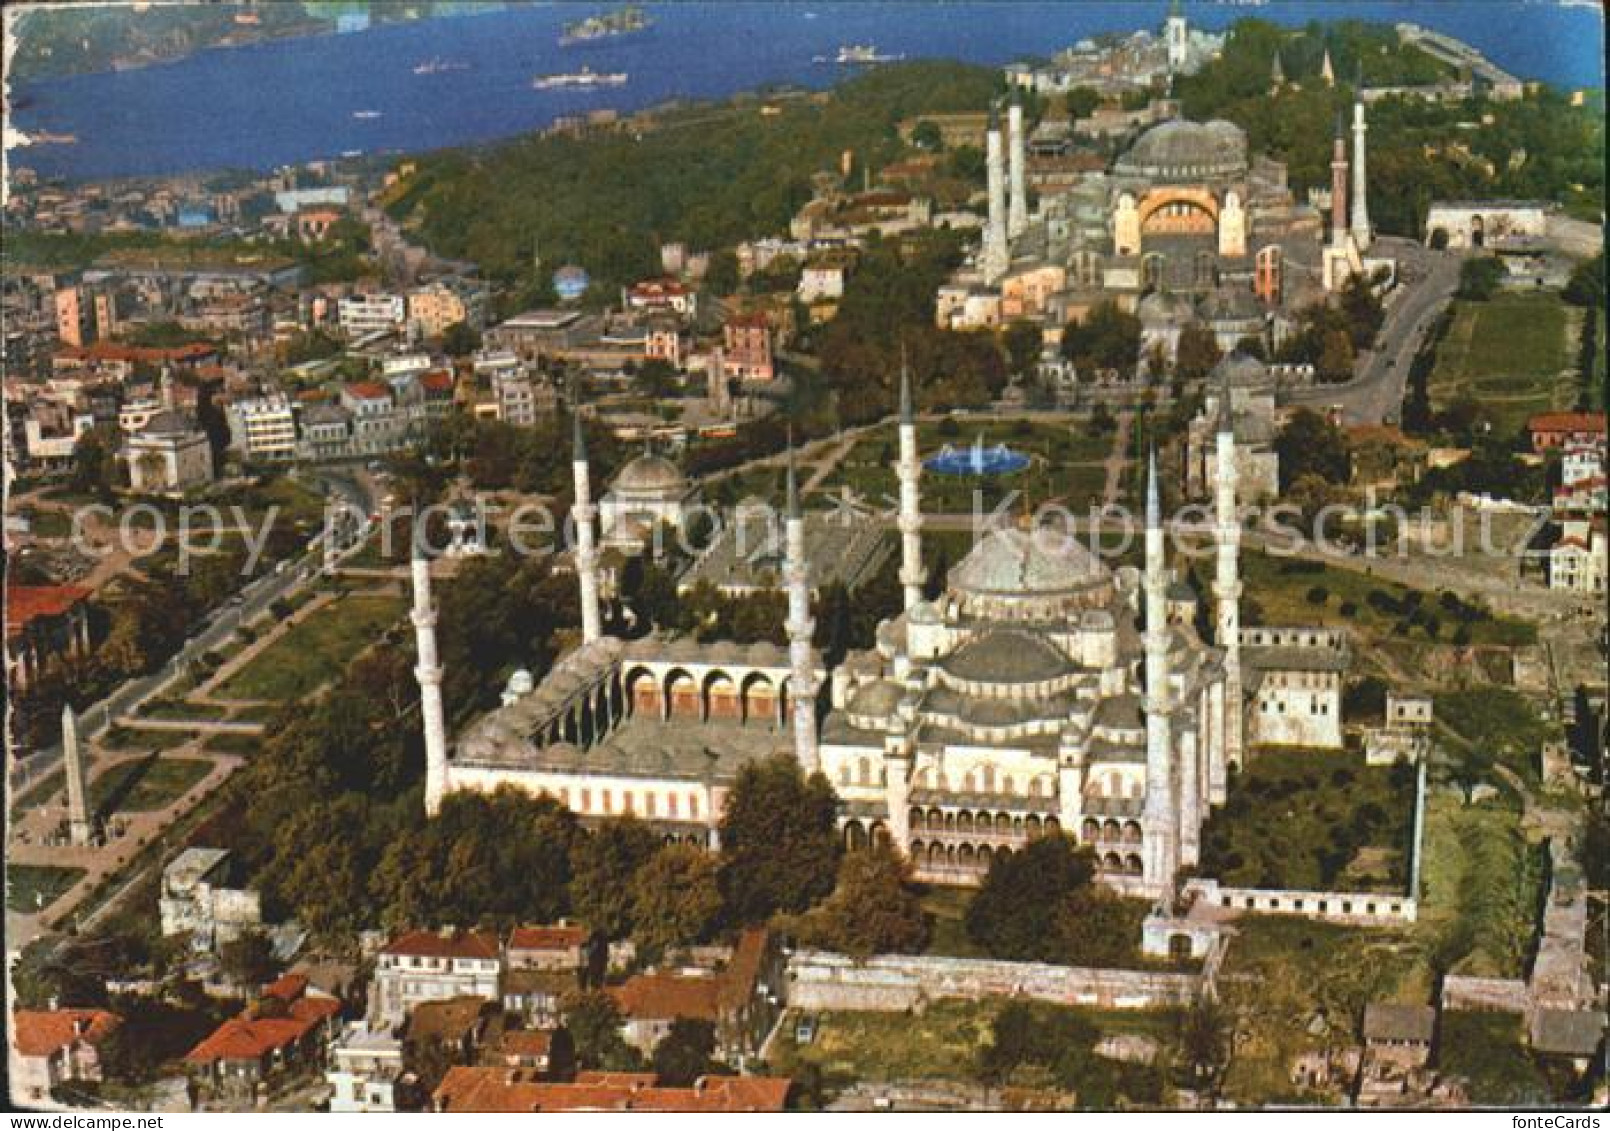 71949923 Istanbul Constantinopel Sultan Ahmet Camii Aya Sofya Muezesi  - Turkey